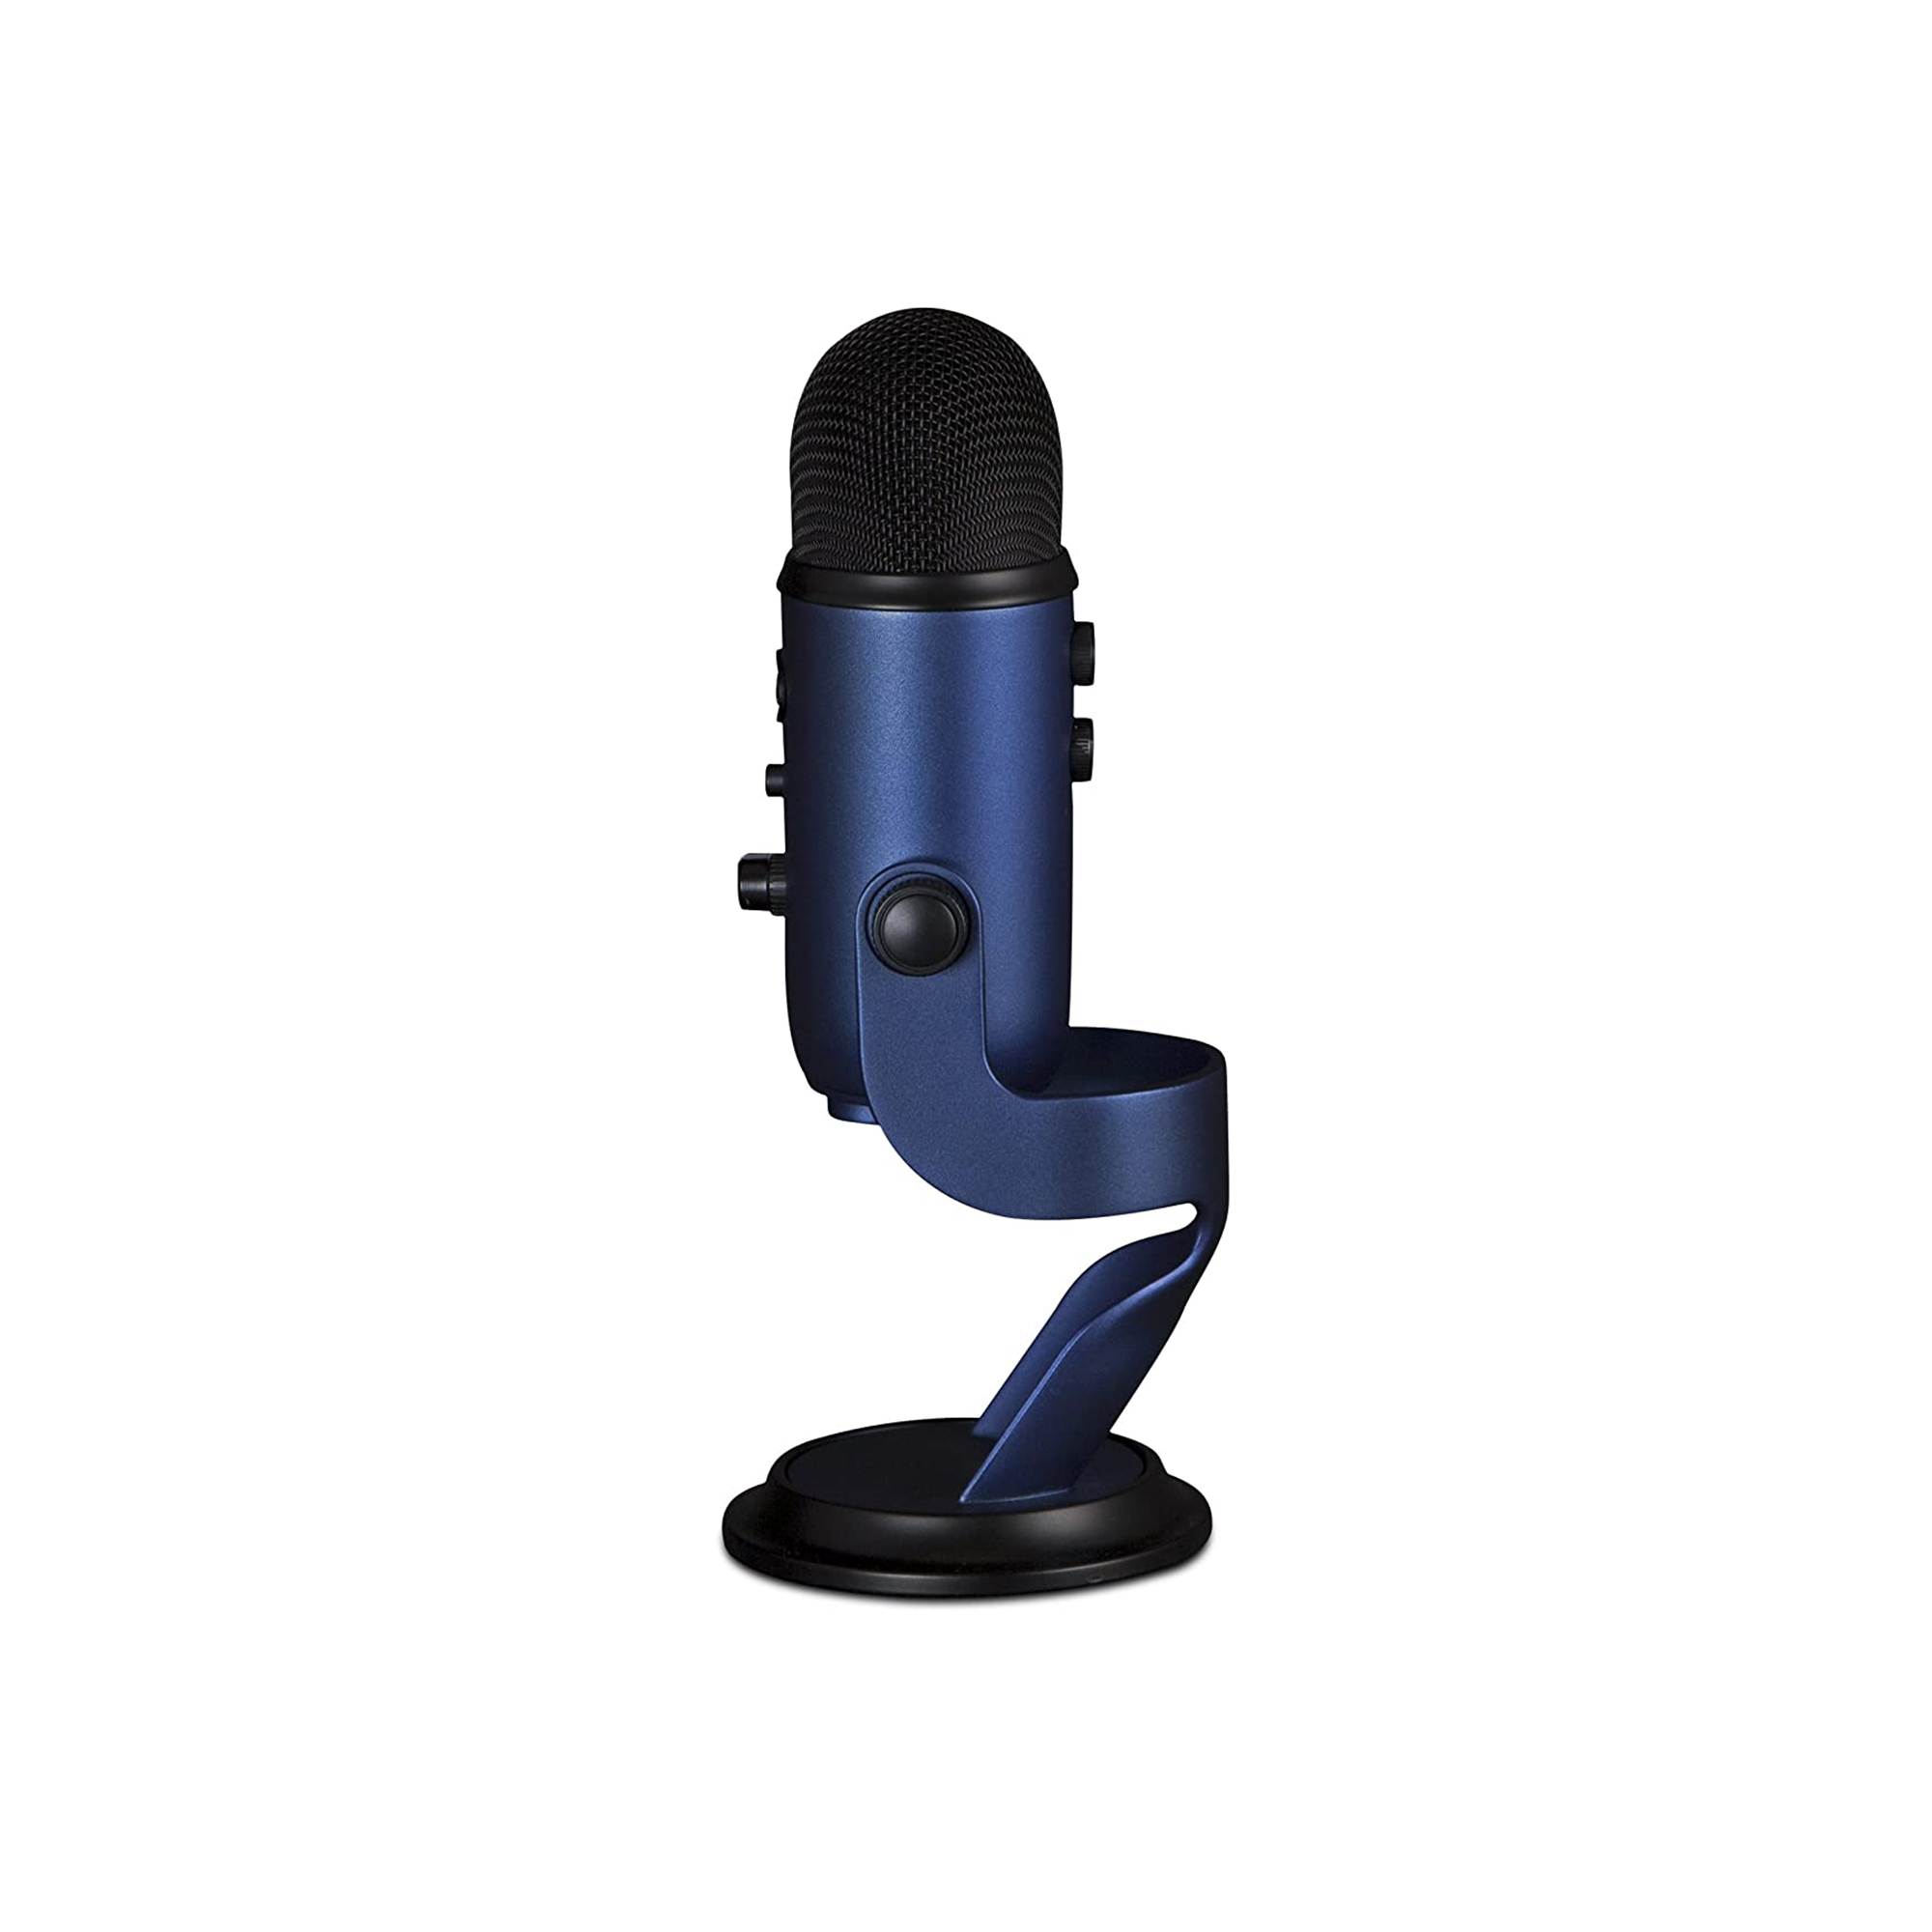 https://laptopsensei.com/wp-content/uploads/2022/02/Blue-Yeti-Premium-Multi-Pattern-USB-Microphone-with-Blue-Voce-Blue-3.jpg